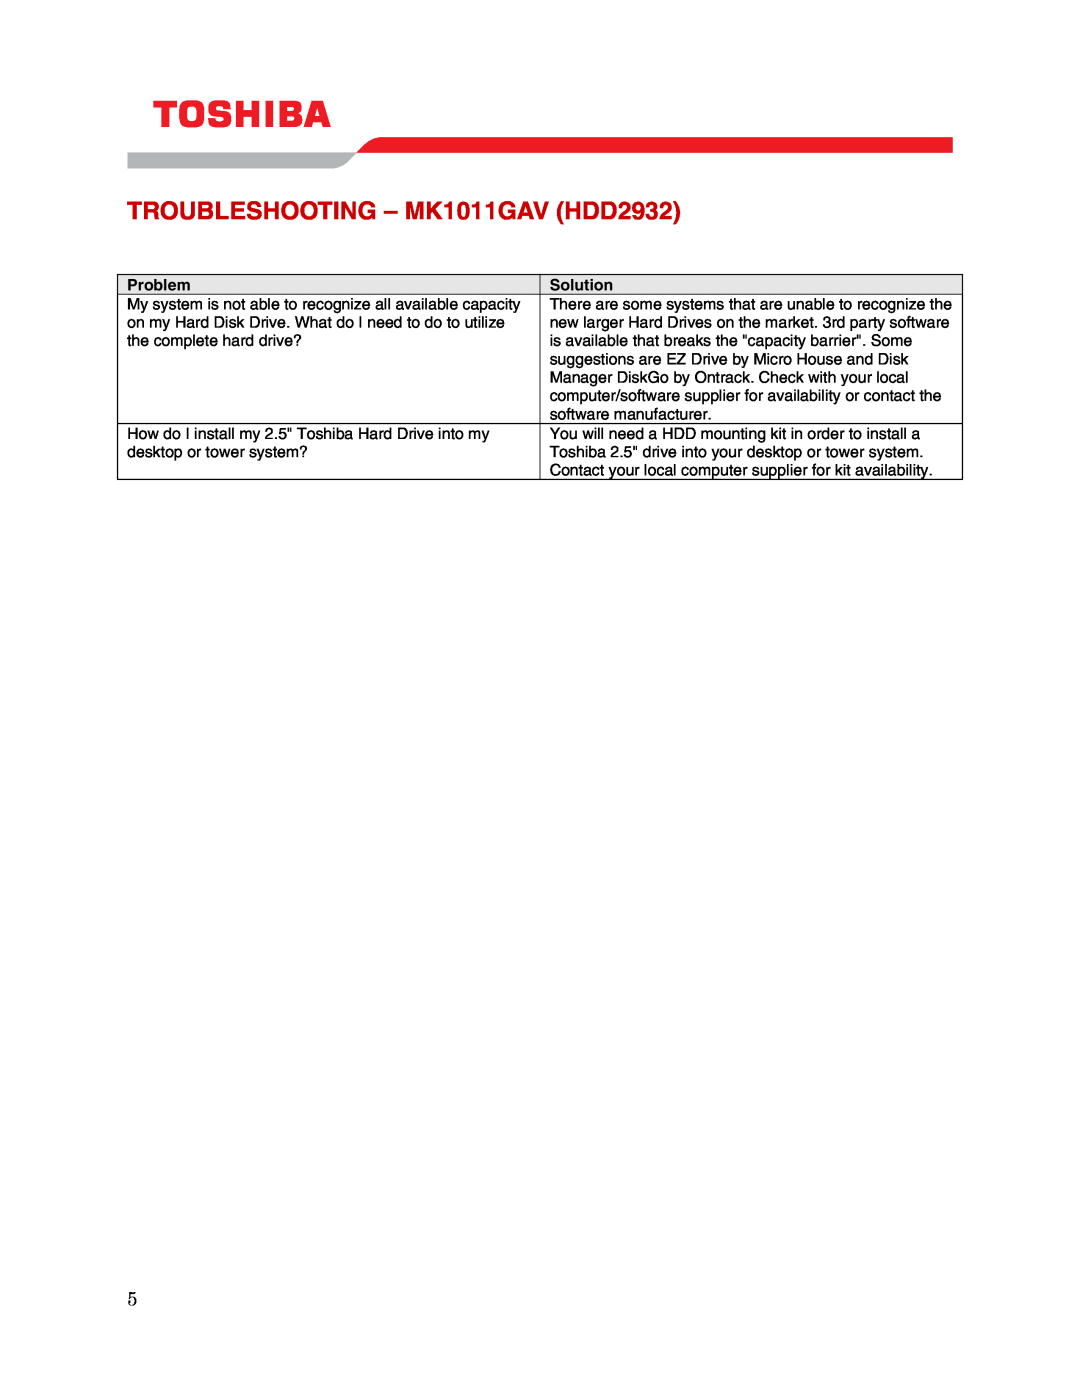 Toshiba user manual TROUBLESHOOTING - MK1011GAV HDD2932, Problem, Solution 